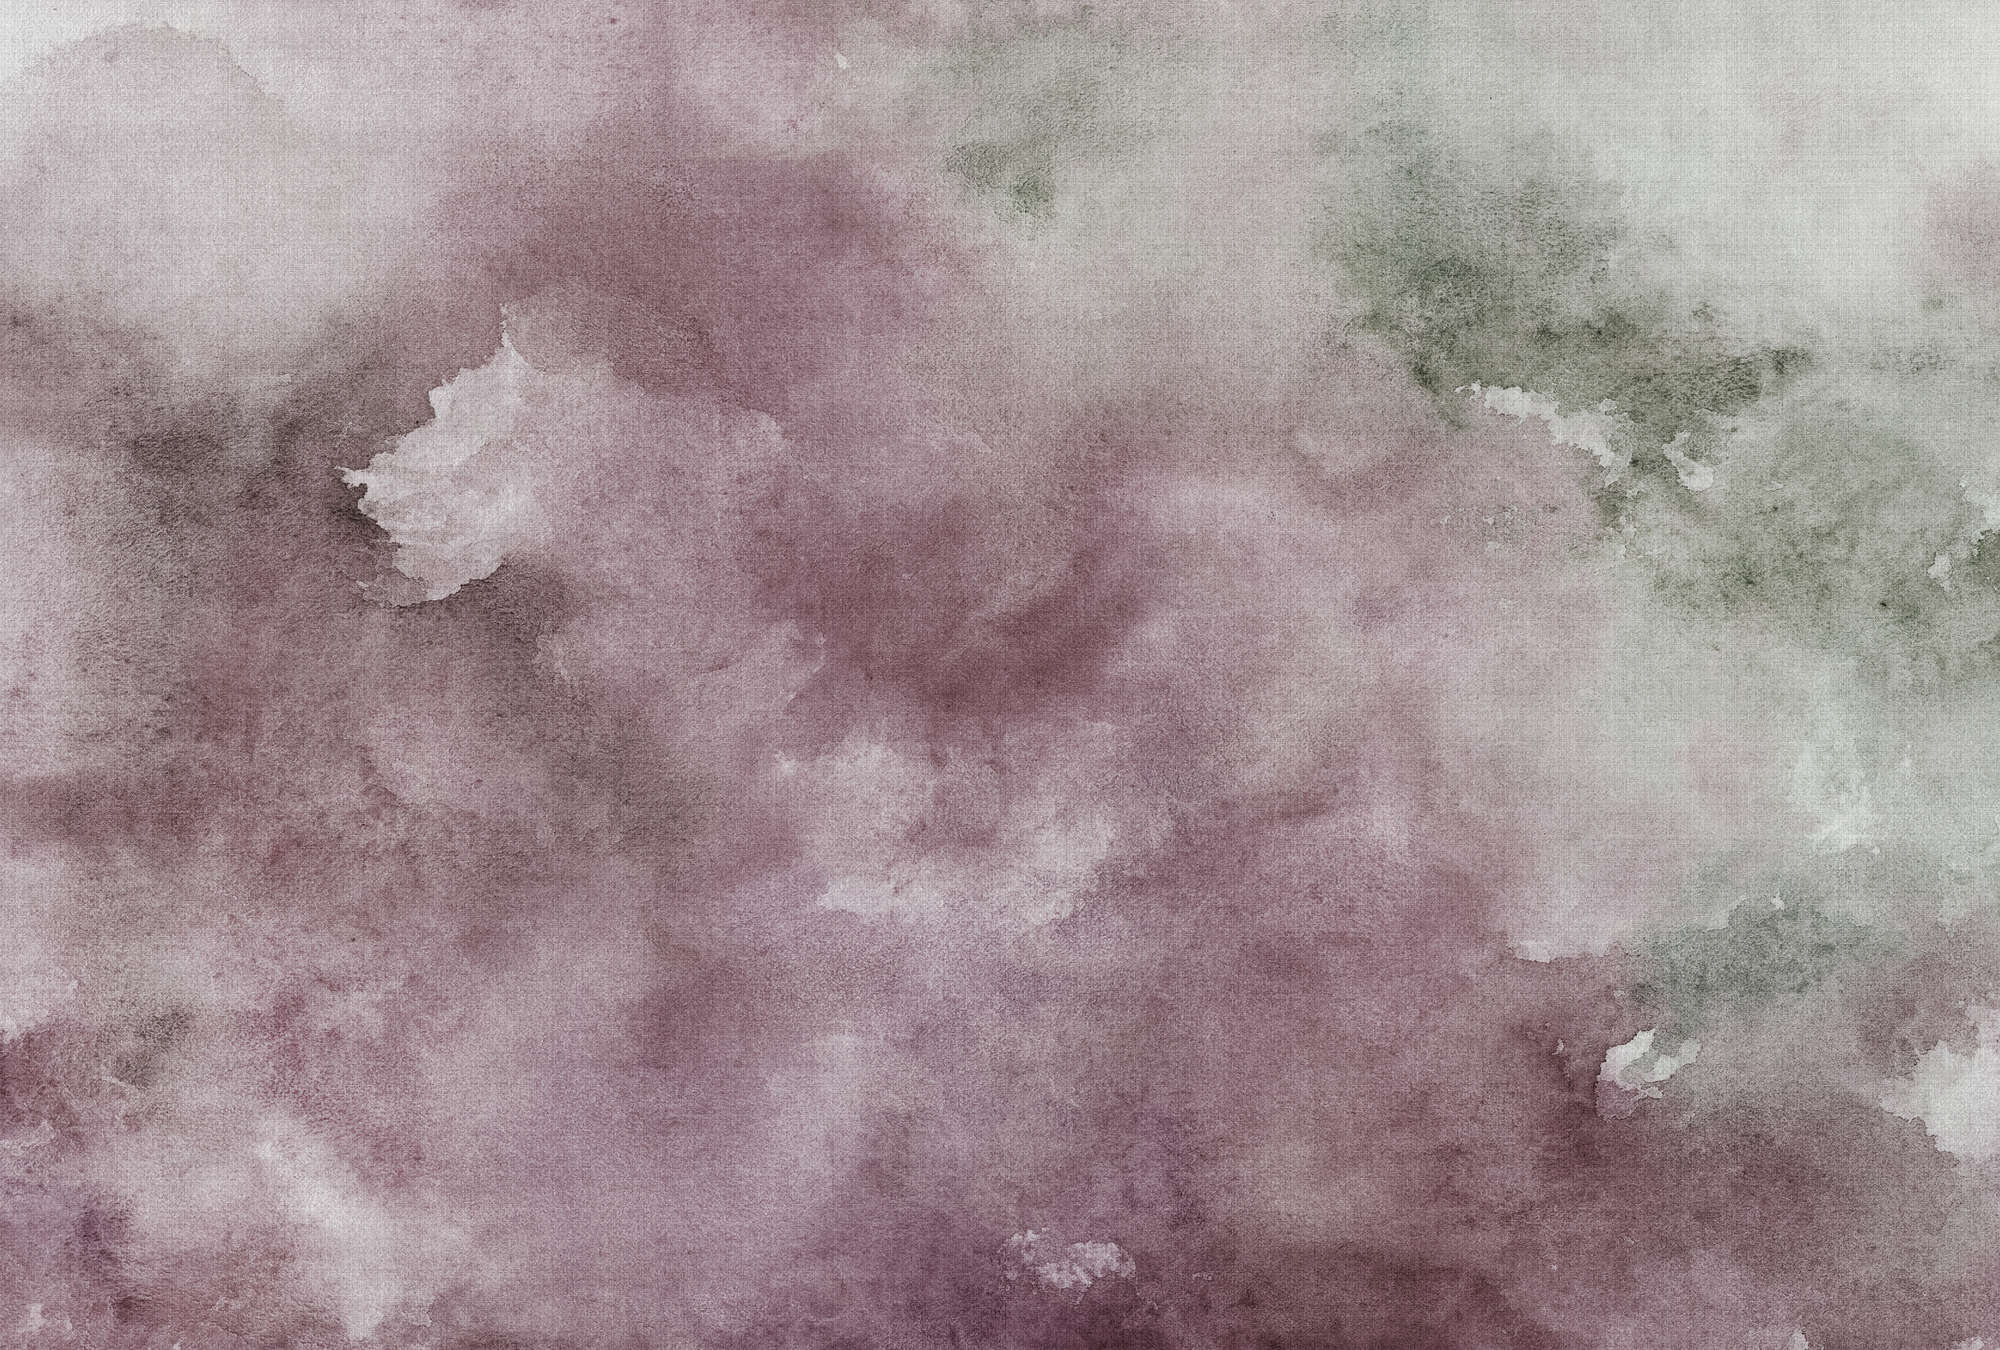             Watercolours 2 - Carta da parati motivo acquerello viola - texture lino naturale - beige, marrone - tessuto non tessuto liscio opaco
        